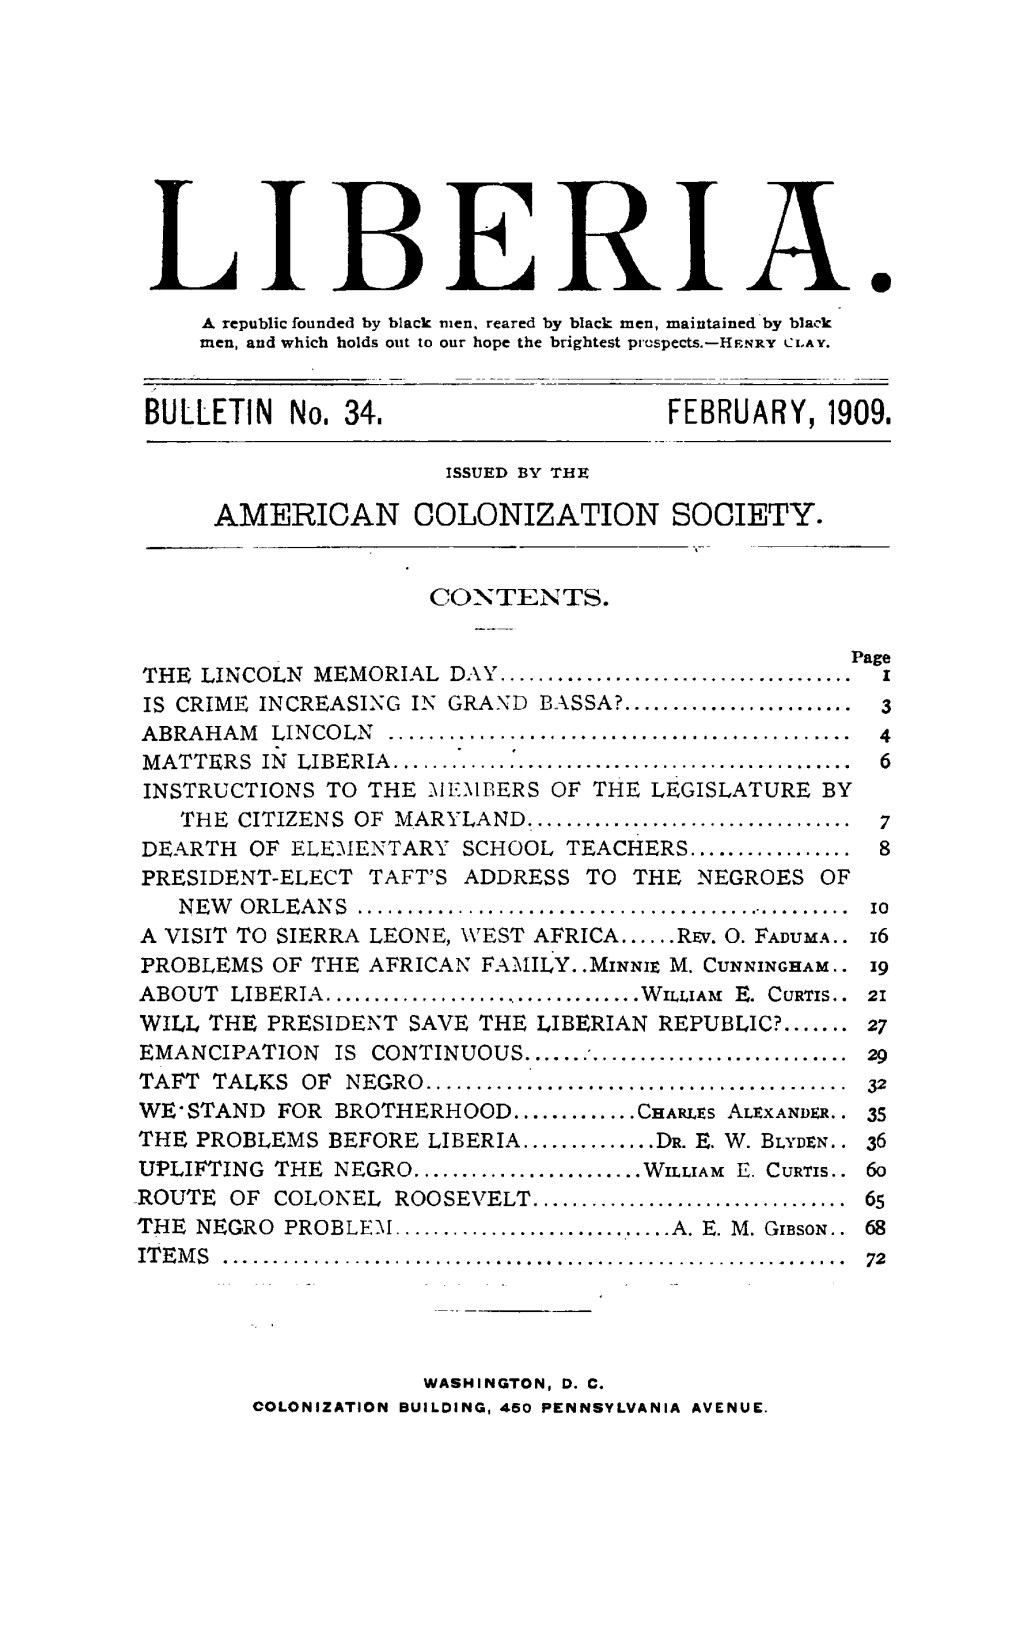 BULLETIN No. 34. FEBRUARY, 1909. AMERICAN COLONIZATION